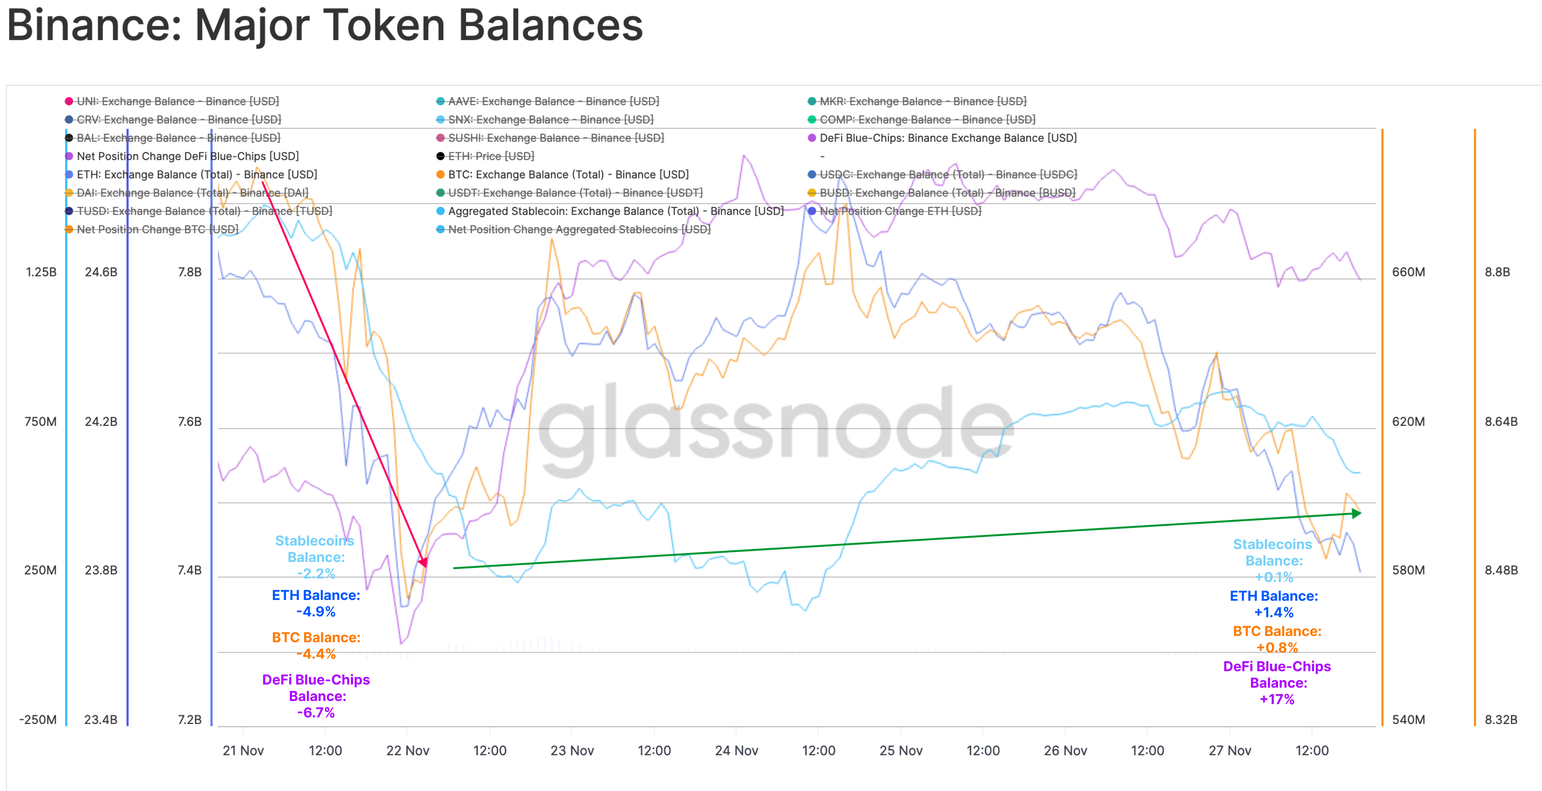 Binance major token balances. Source: Glassnode